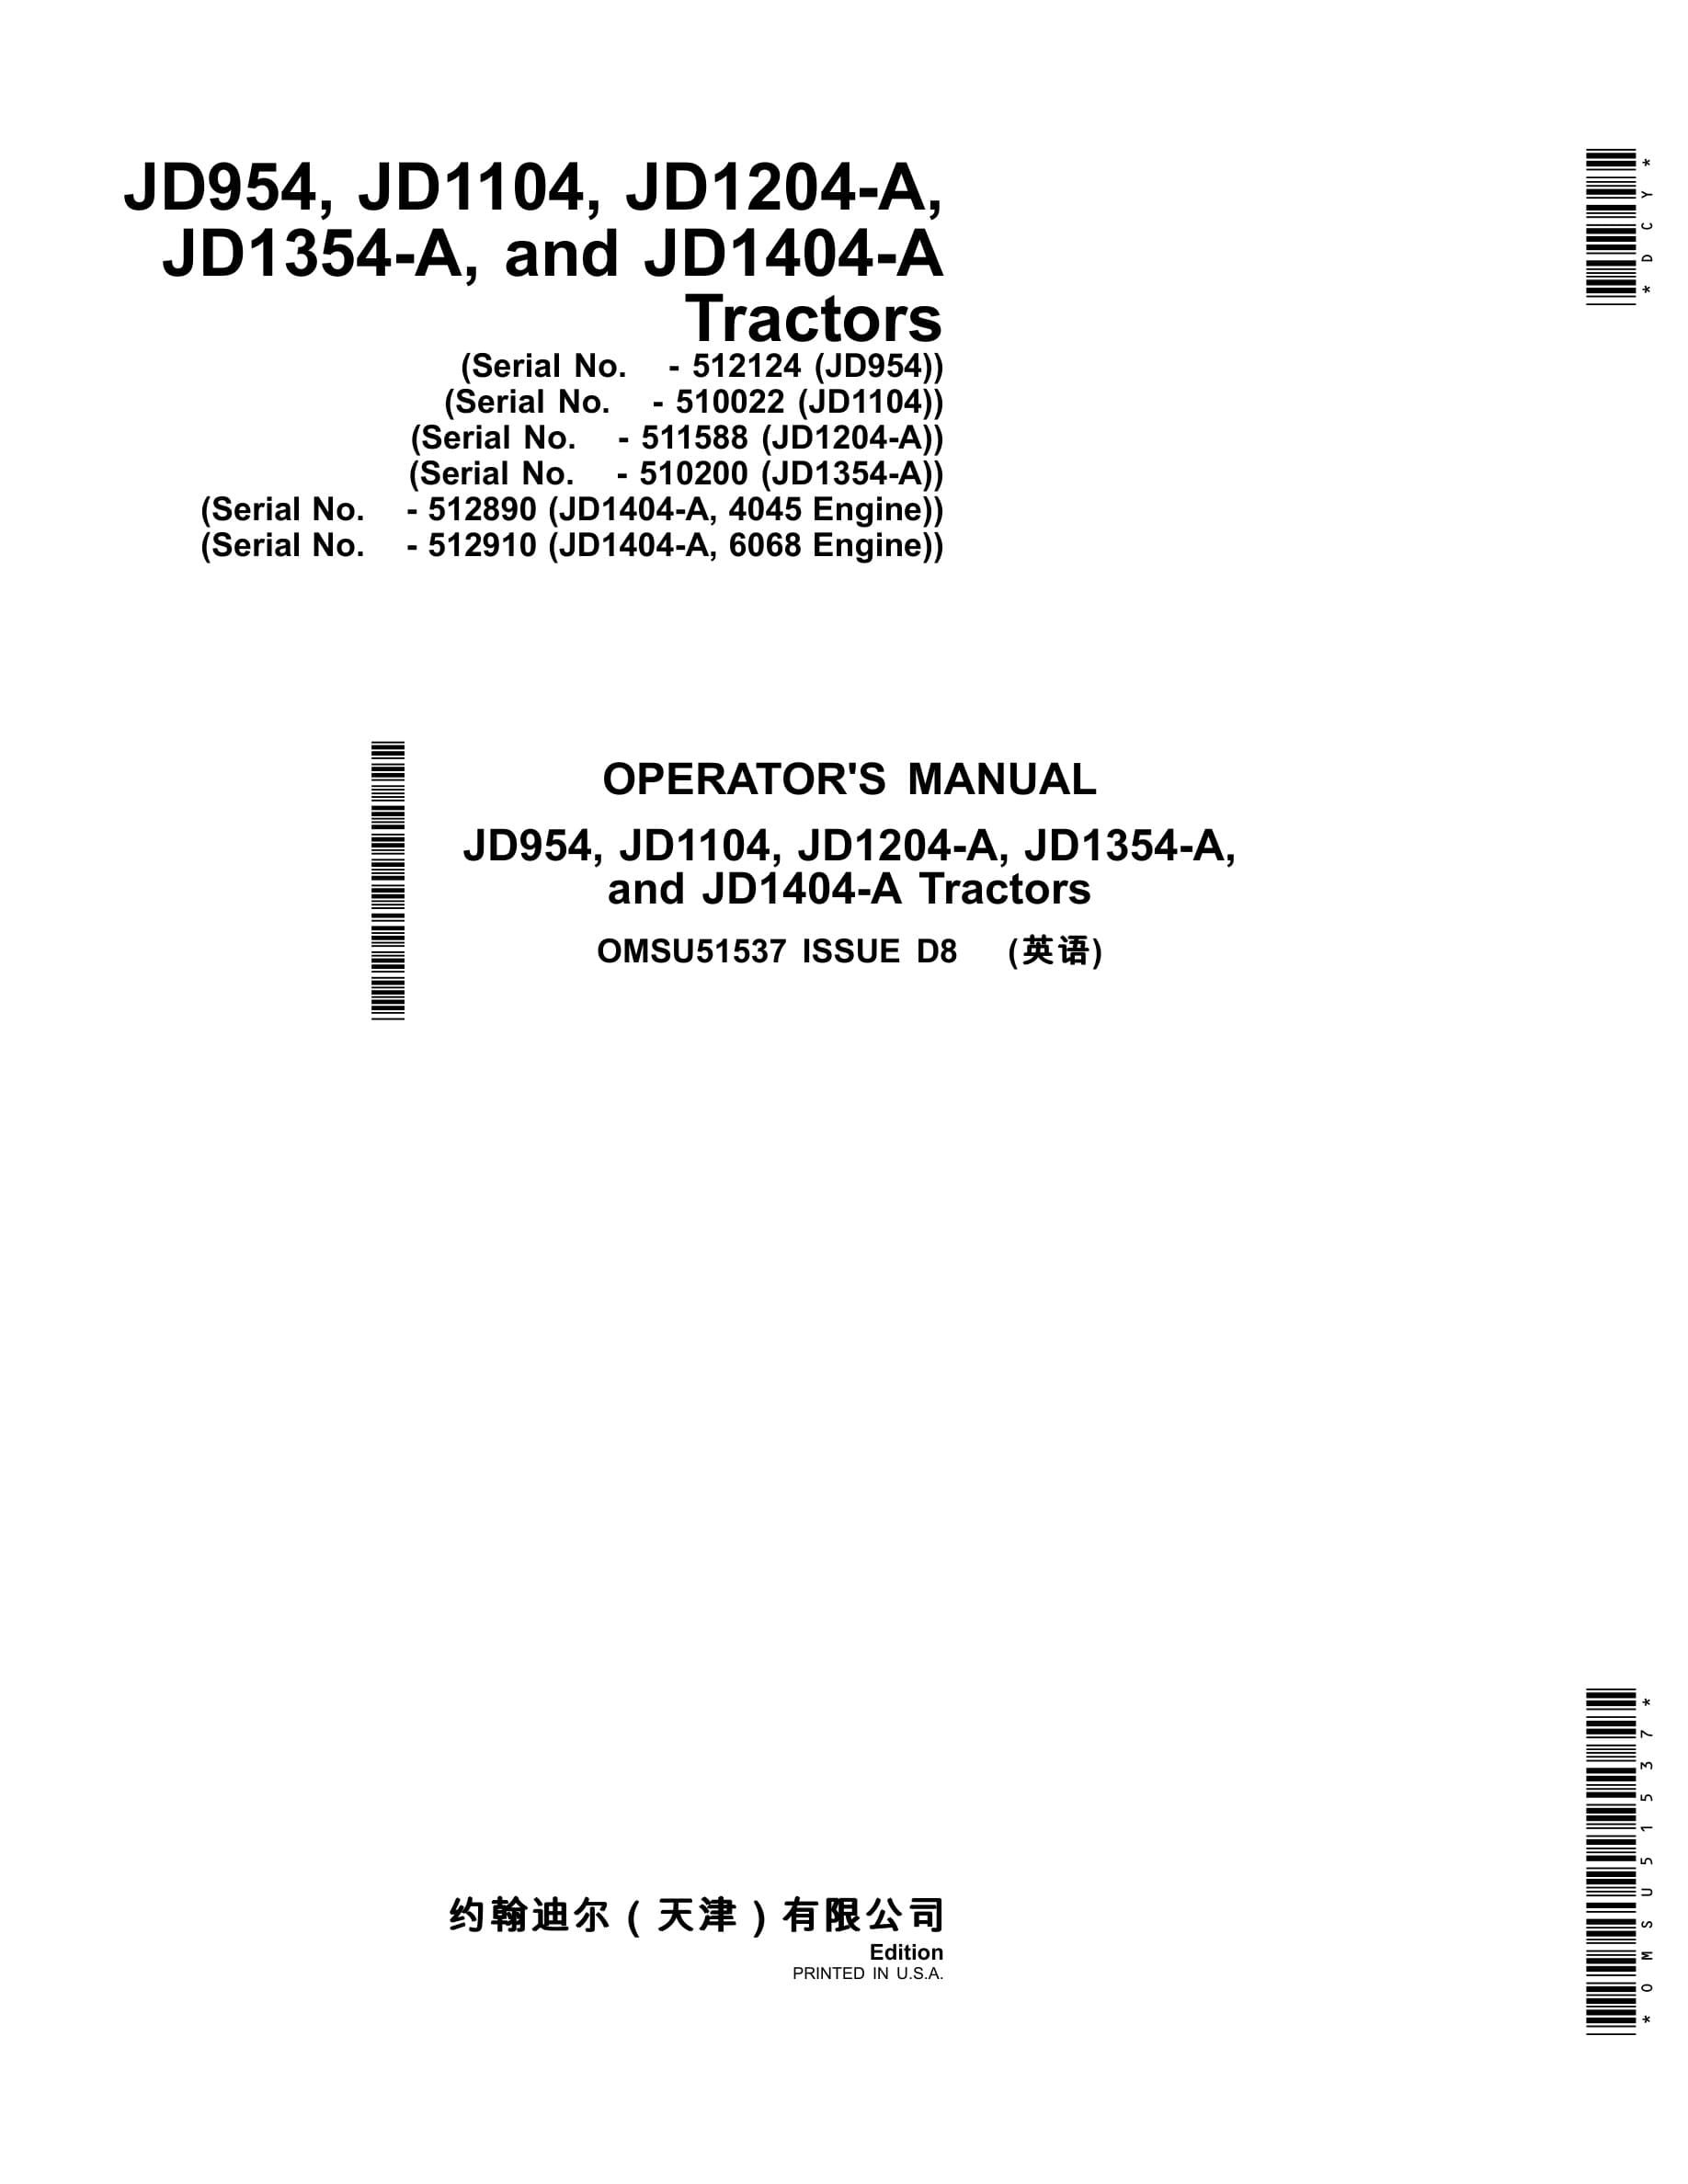 John Deere Jd954, Jd1104, Jd1204-a, Jd1354-a, And Jd1404-a Tractors Operator Manuals OMSU51537-1